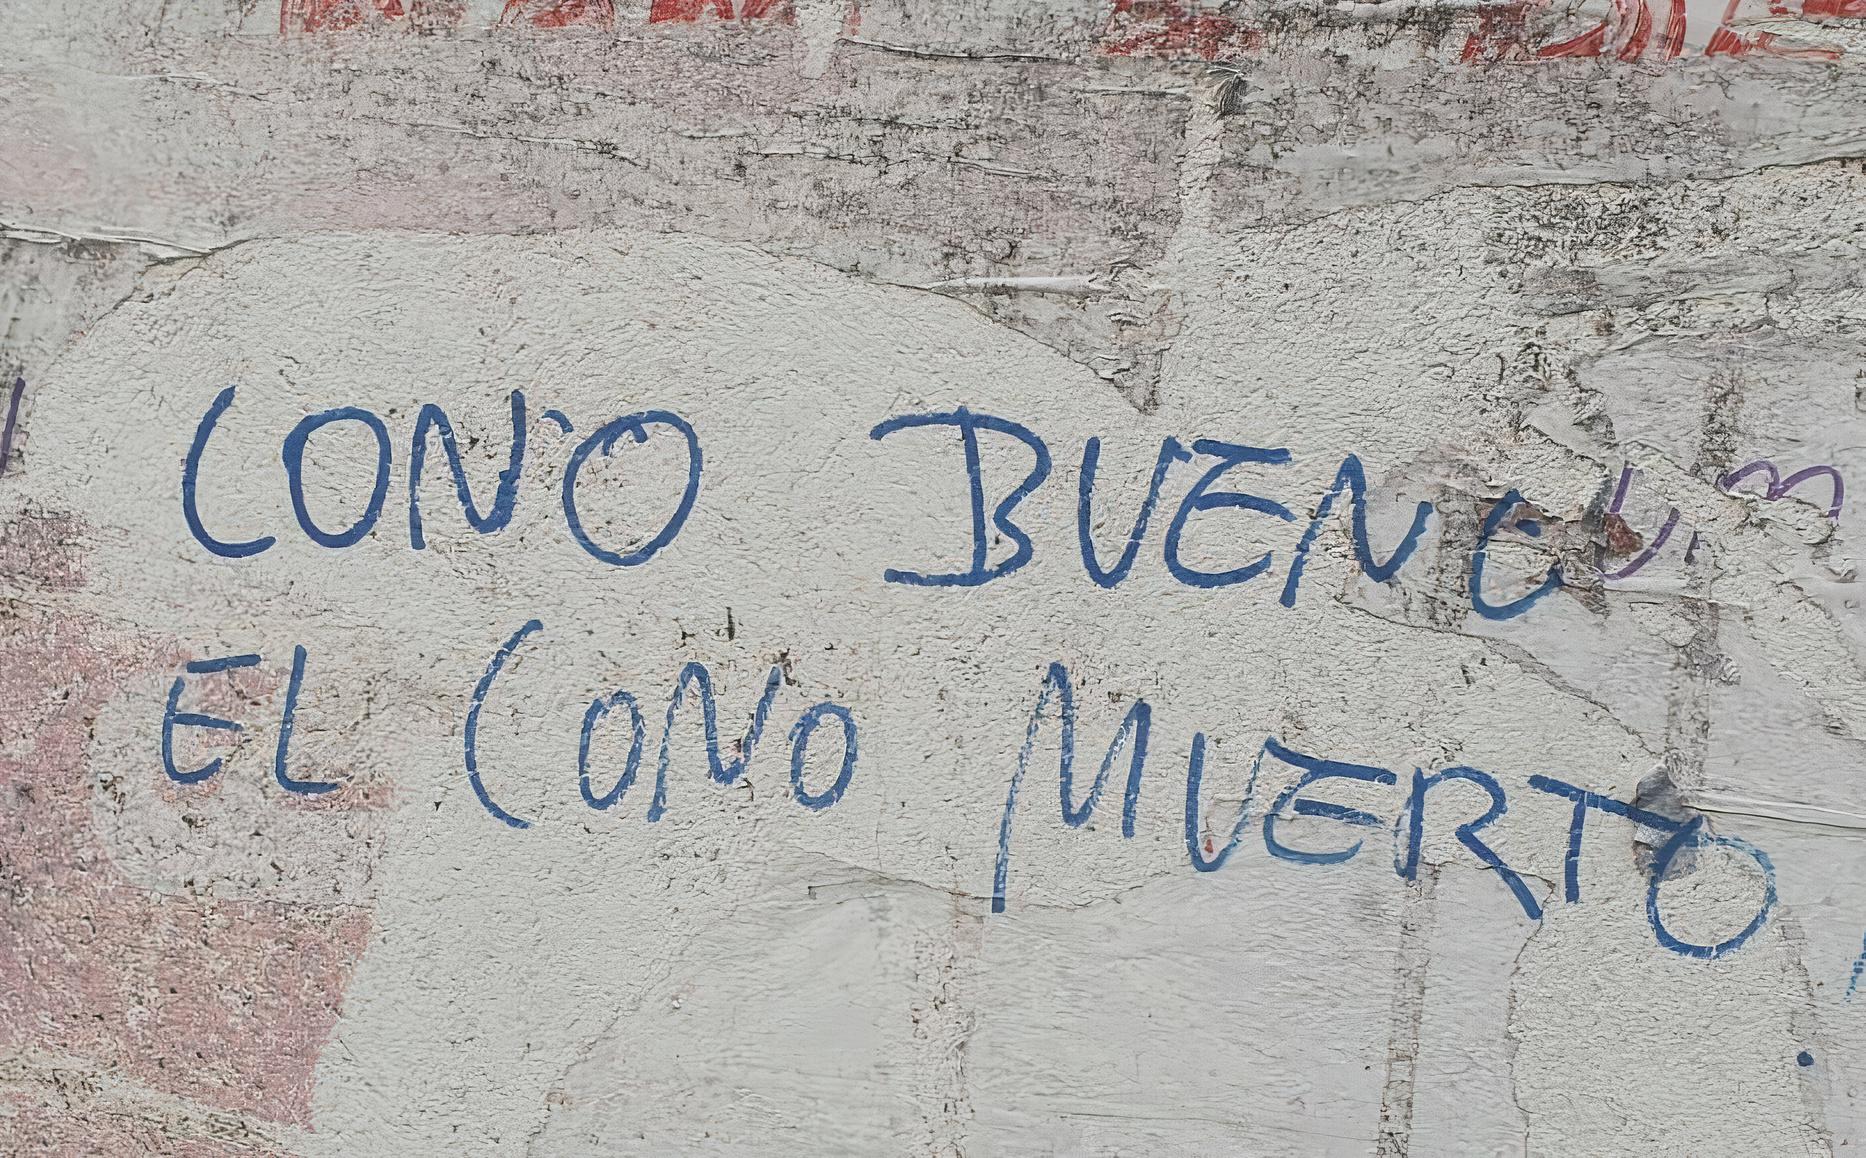 Pintadas aparecidas en las calles de Lugo